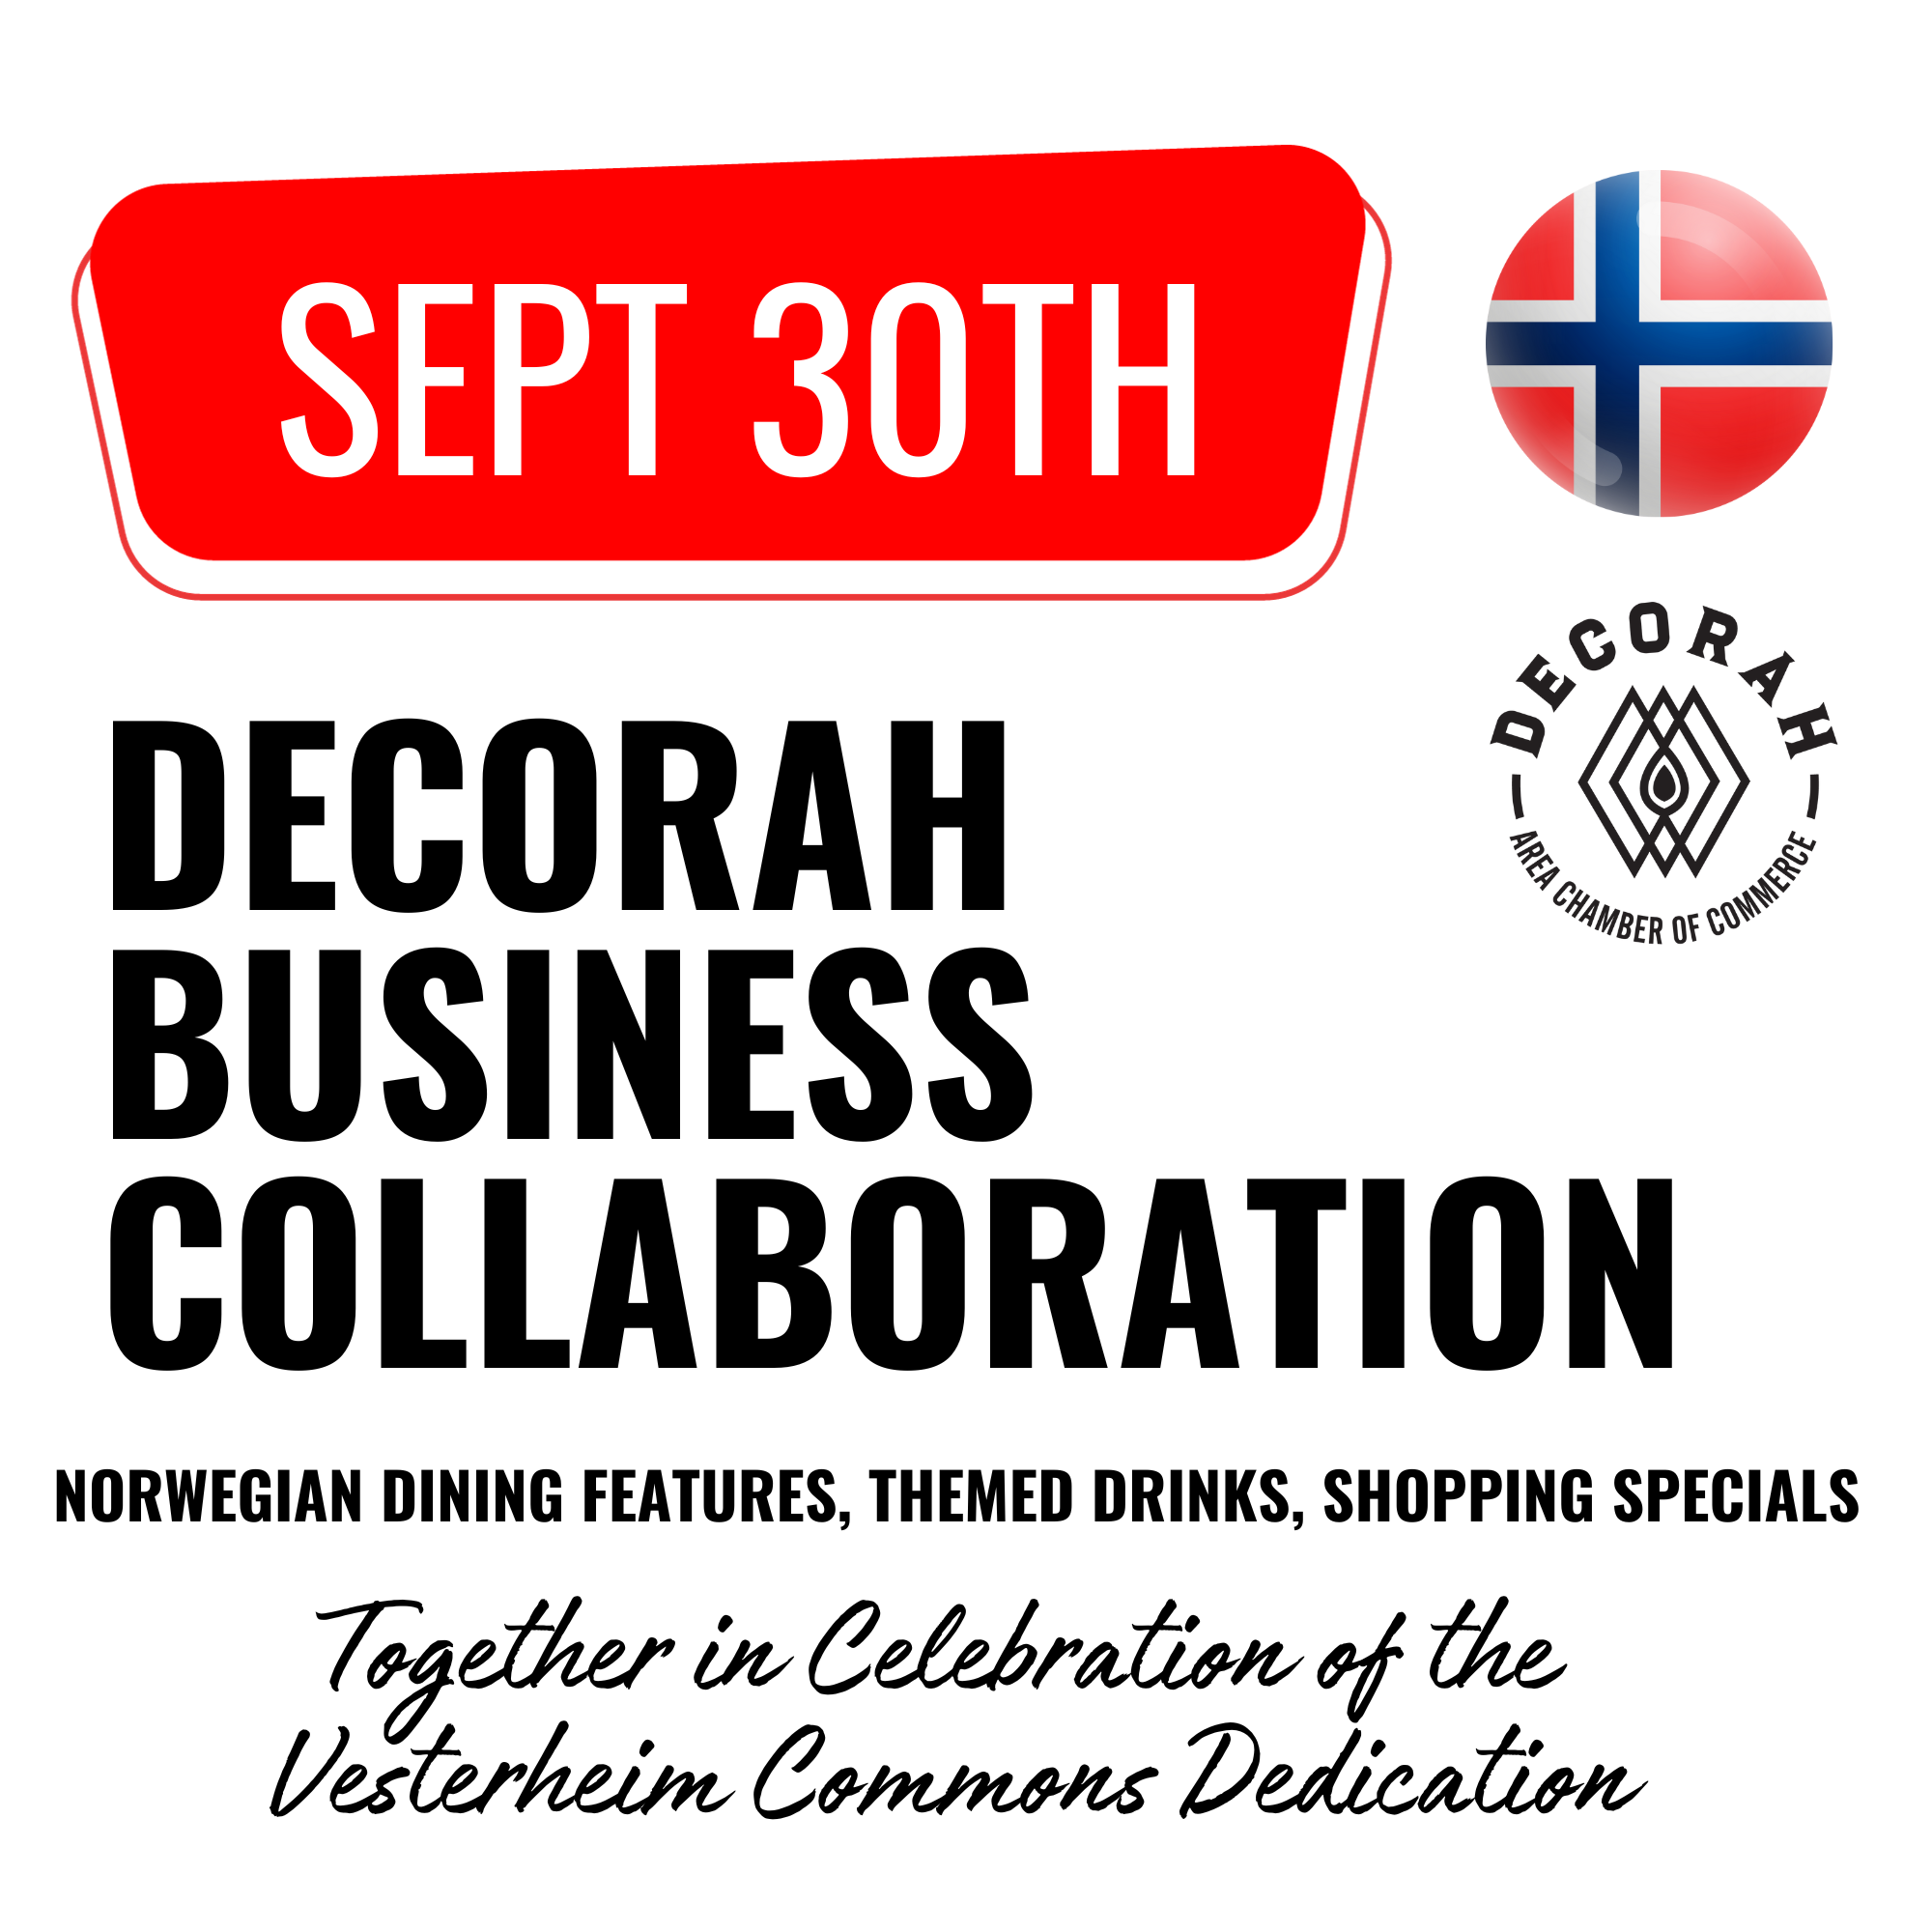 Decorah Business Collaboration - Norwegian Features in Support of Vesterheim Commons Dedication thumbnail